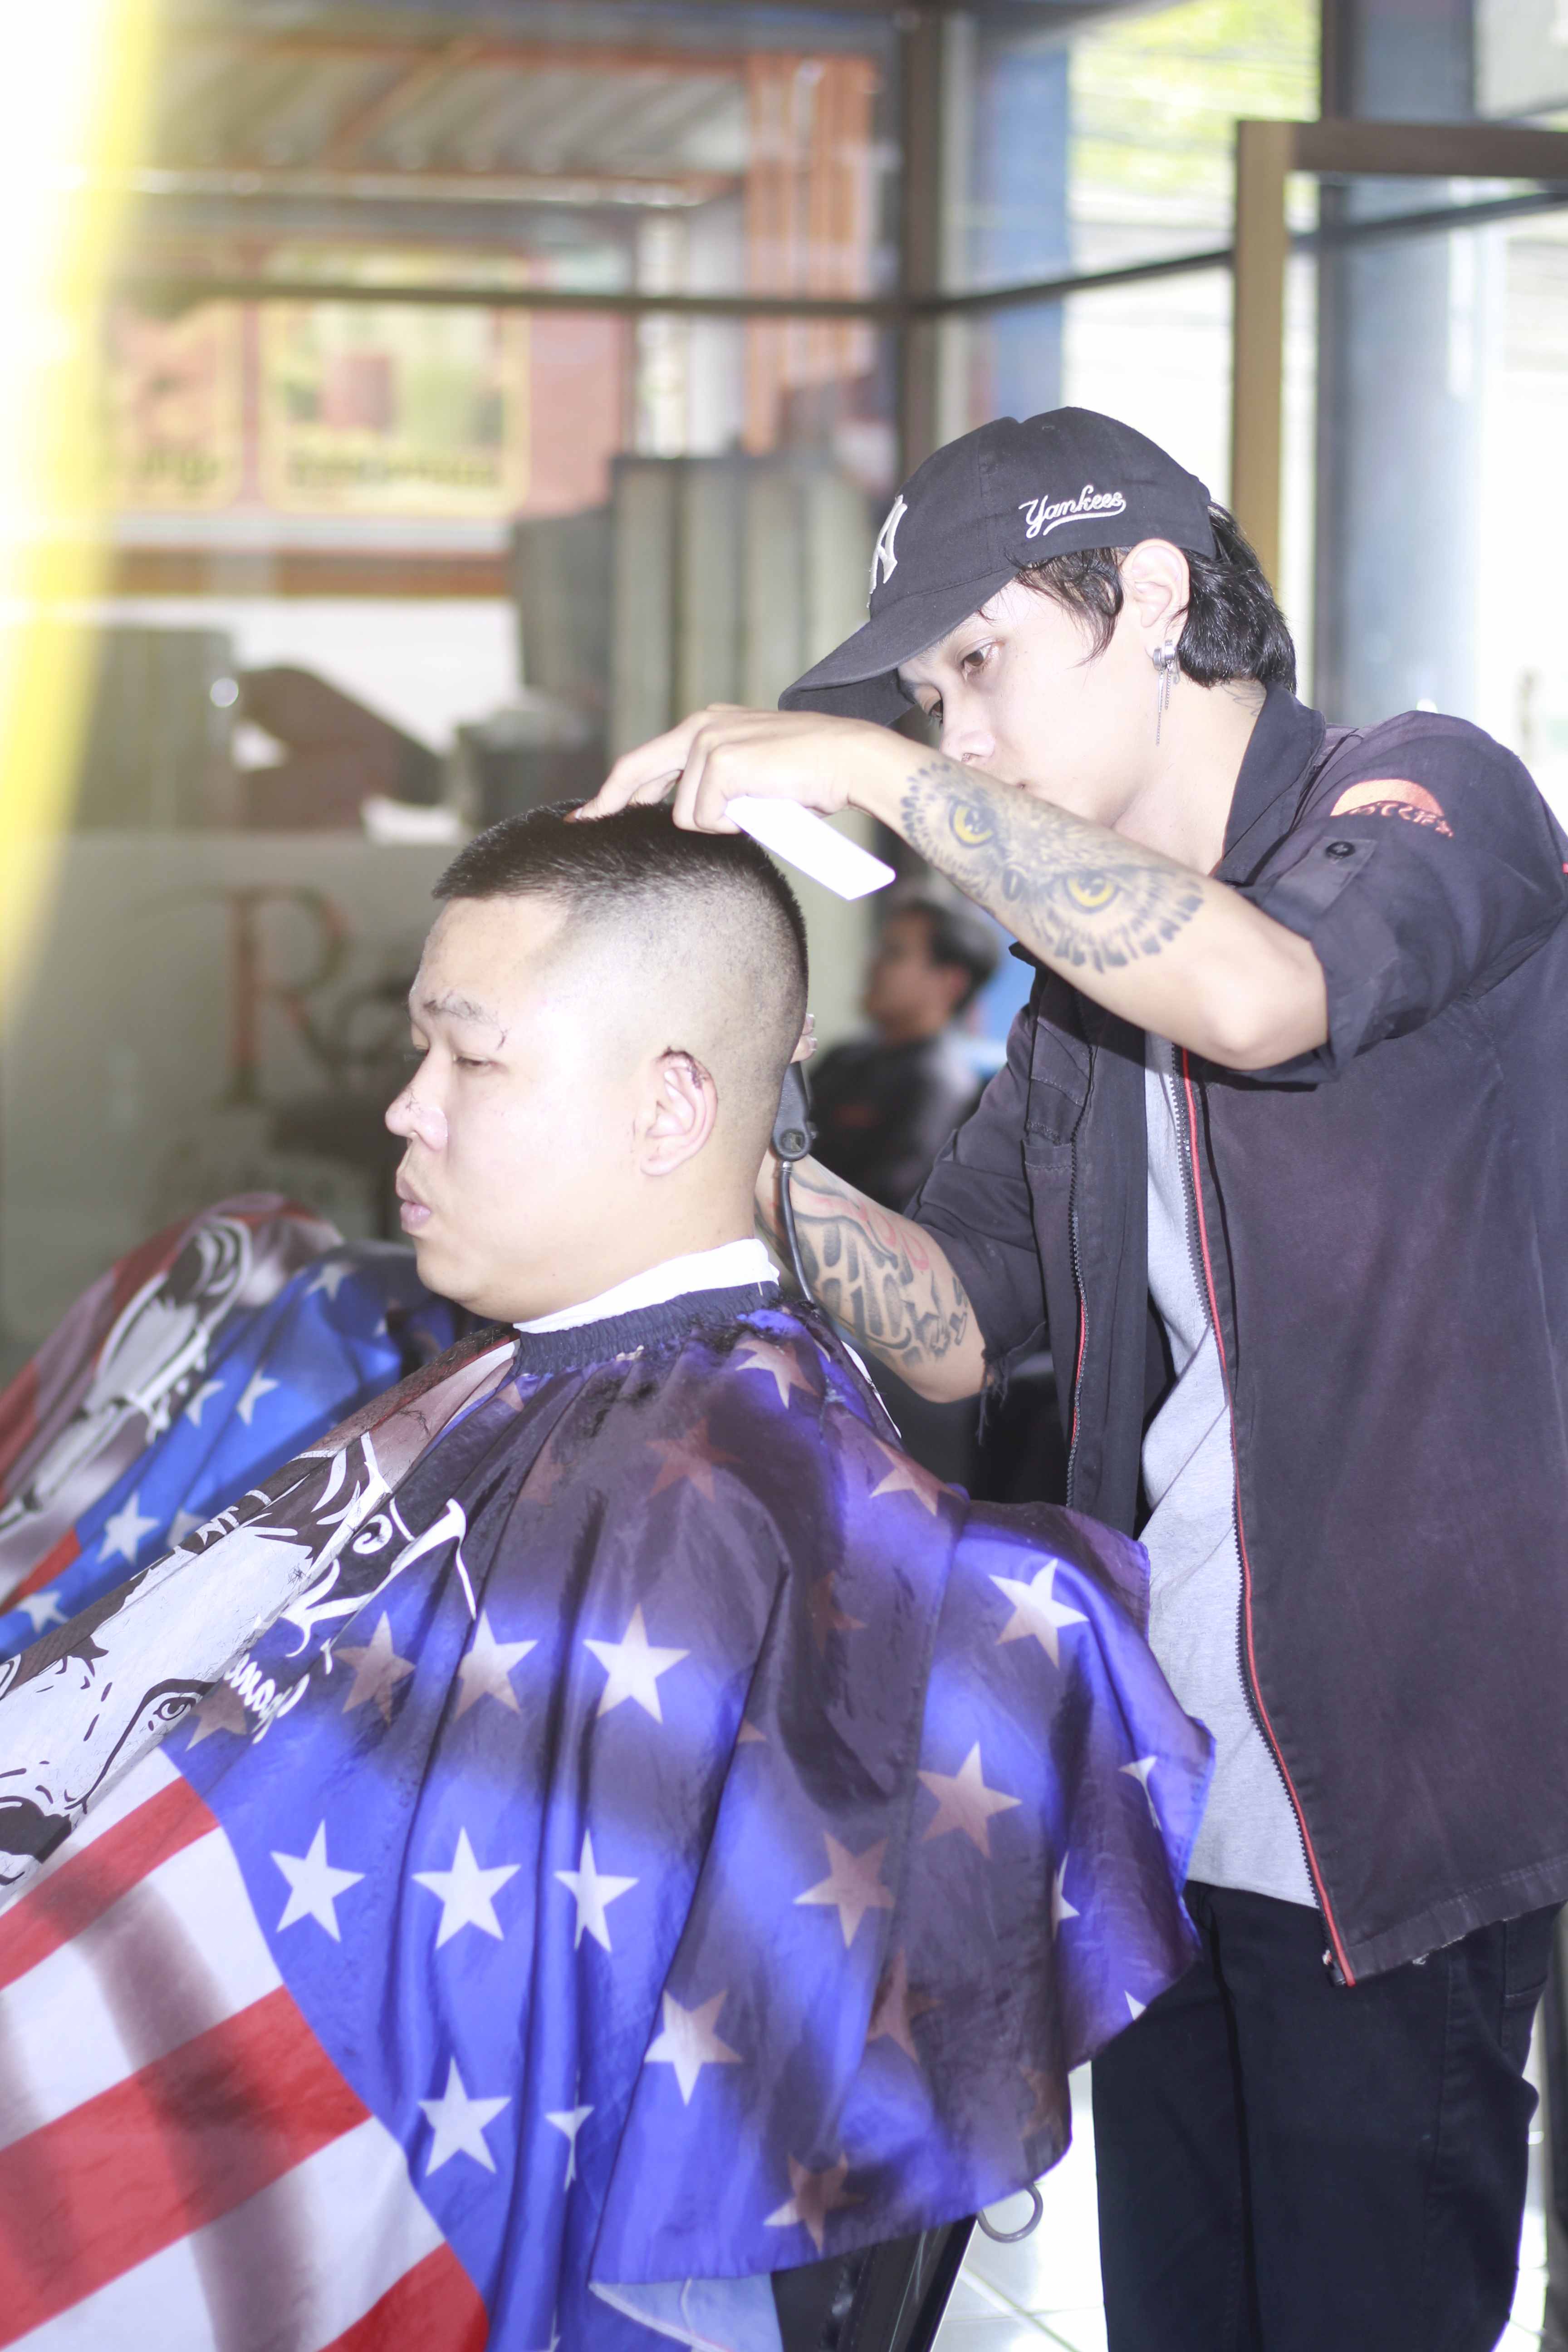 Harga Barbershop Di Kecamatan Lowokwaru Profesional